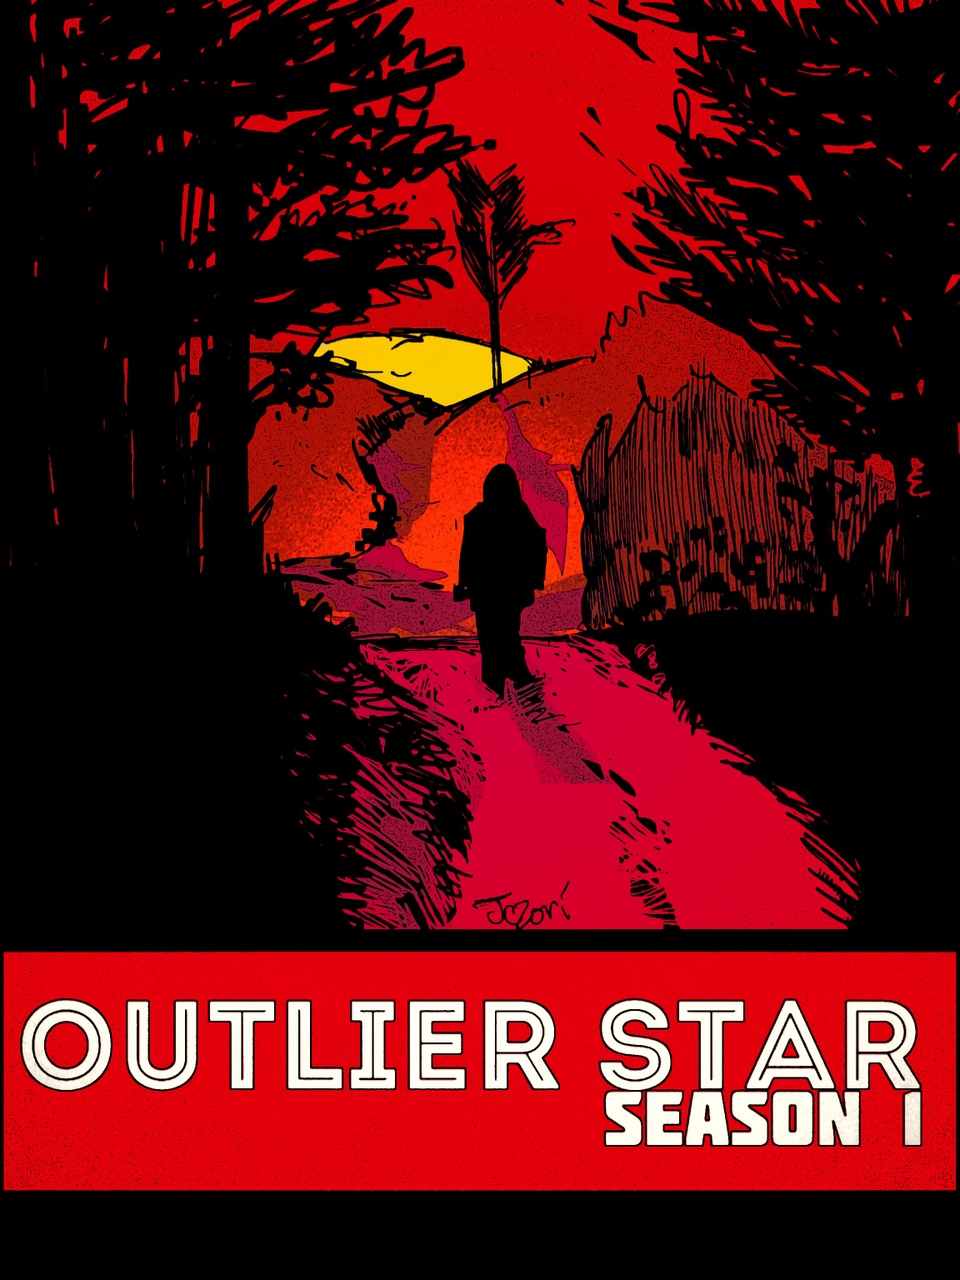 Outlier star